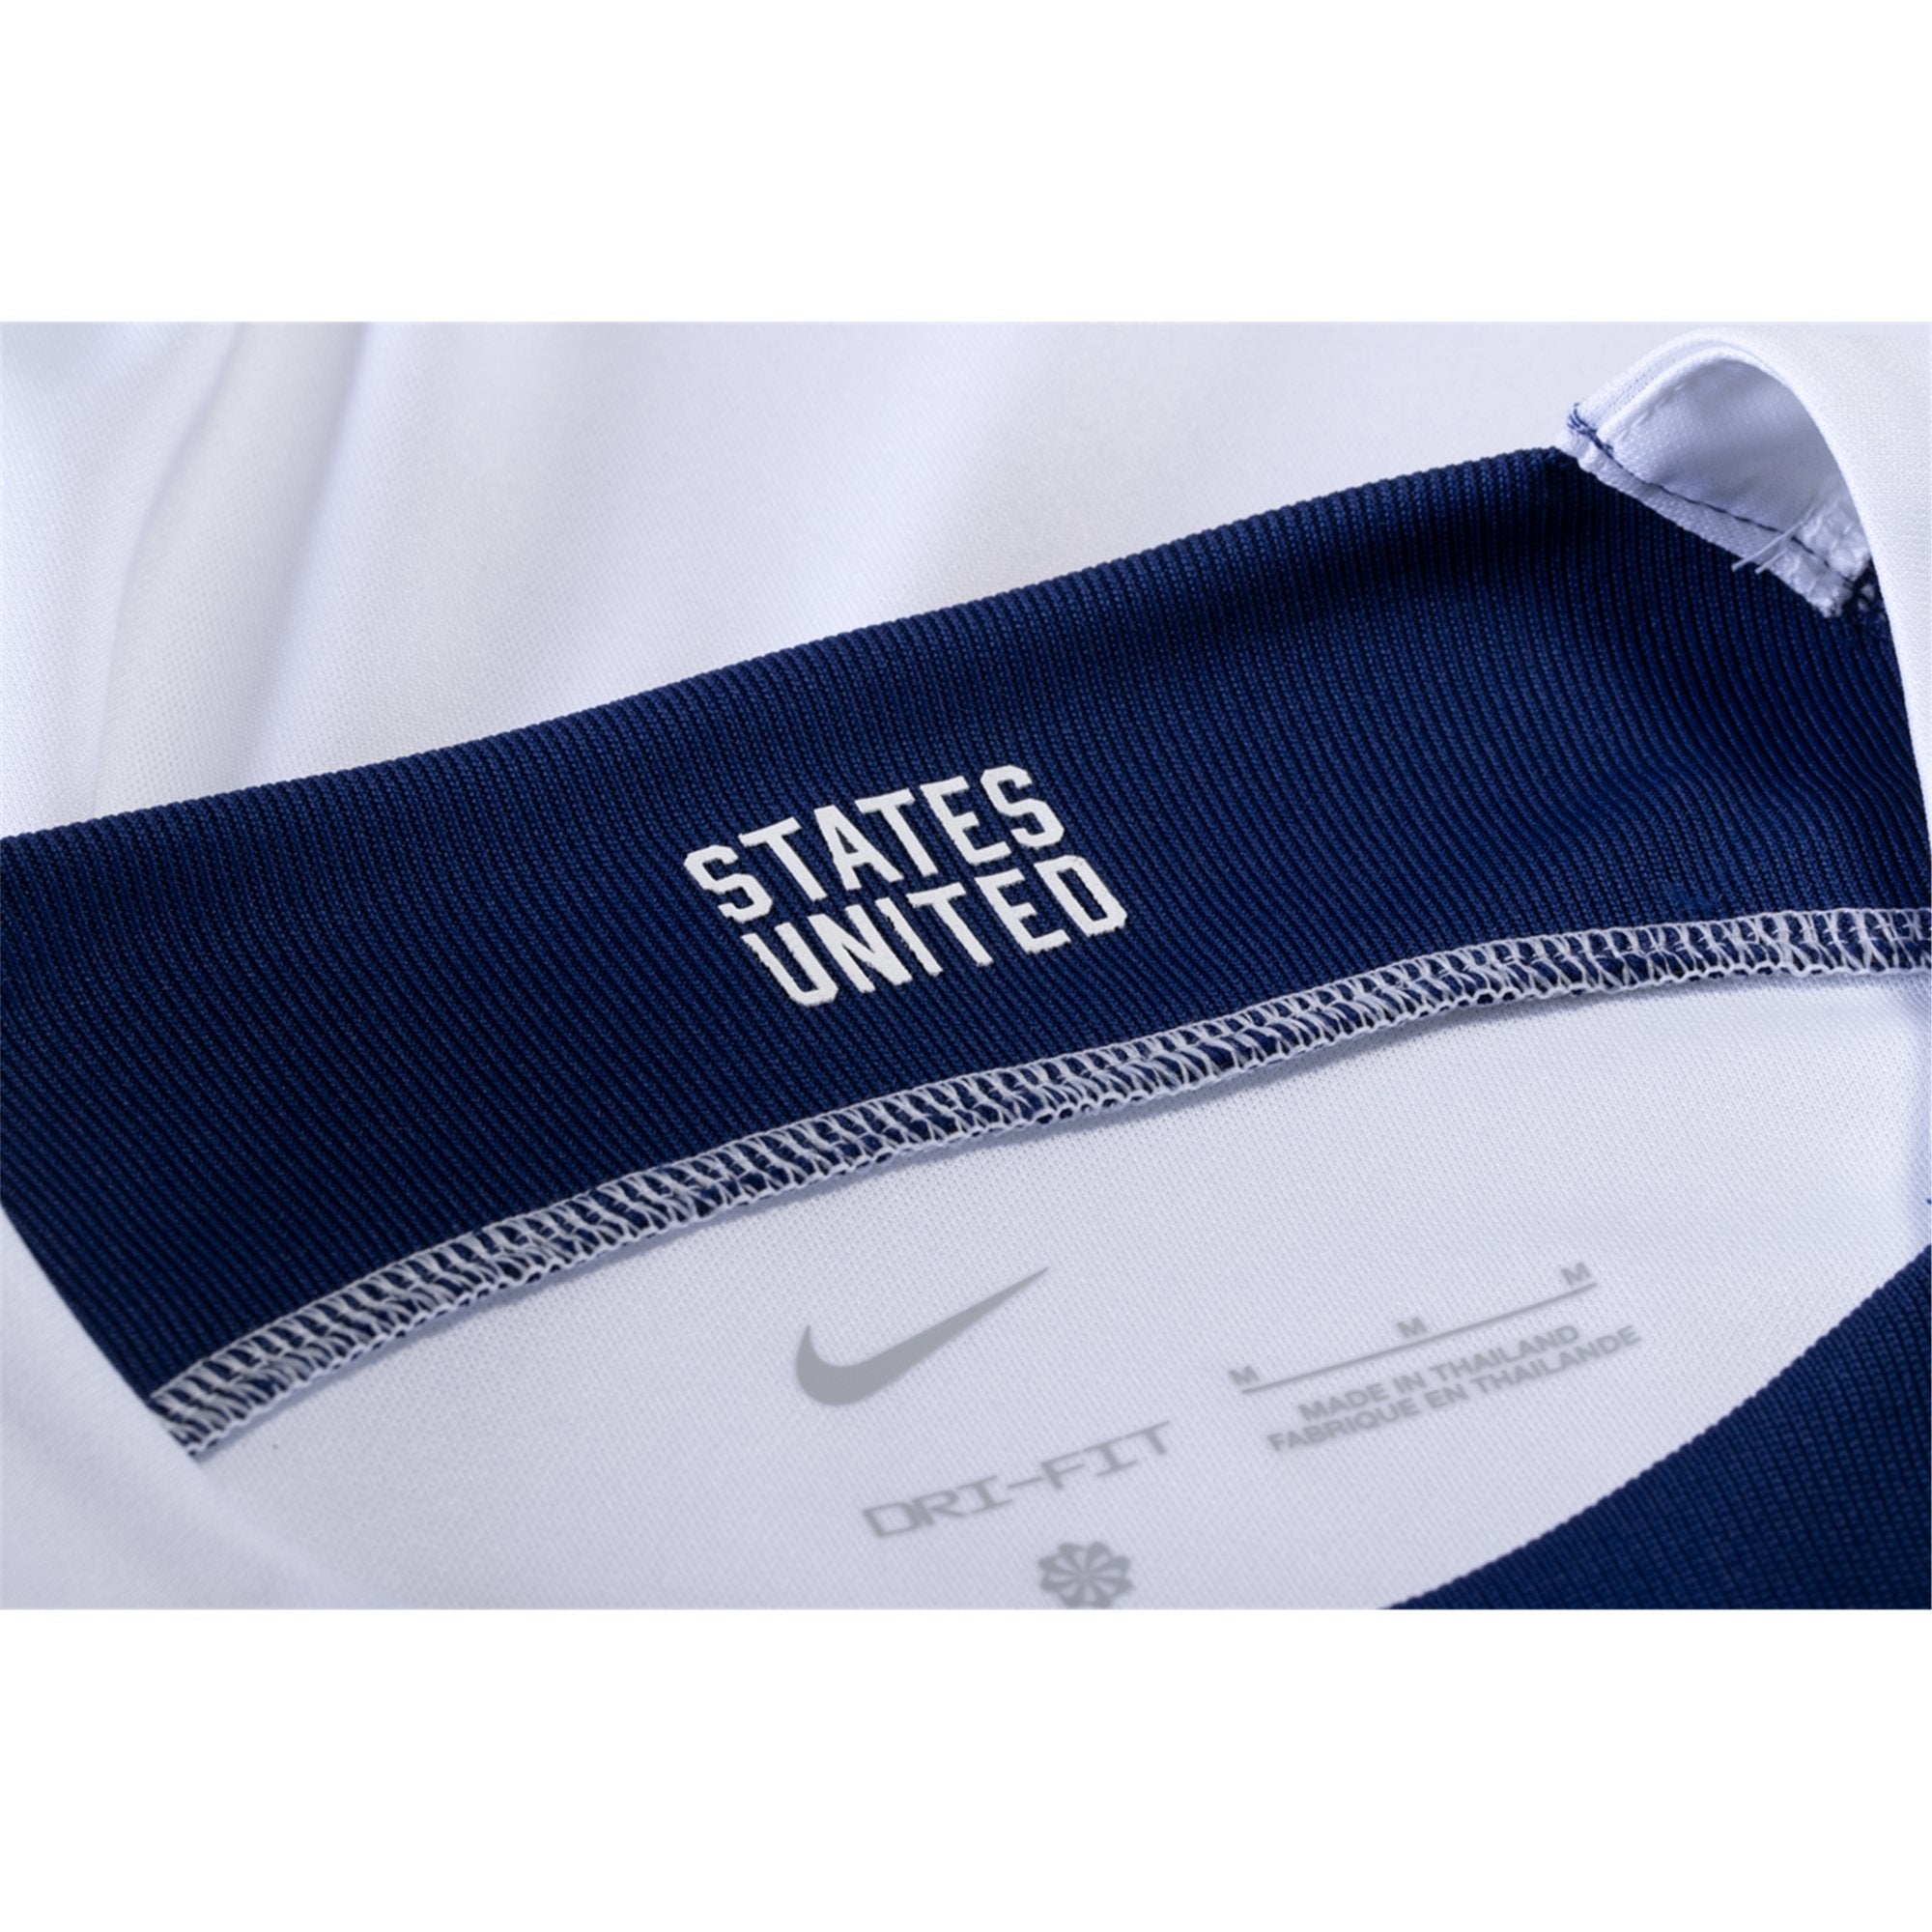 Men's Replica Nike Brazil Away Jersey 2022 DN0678-433 – Soccer Zone USA